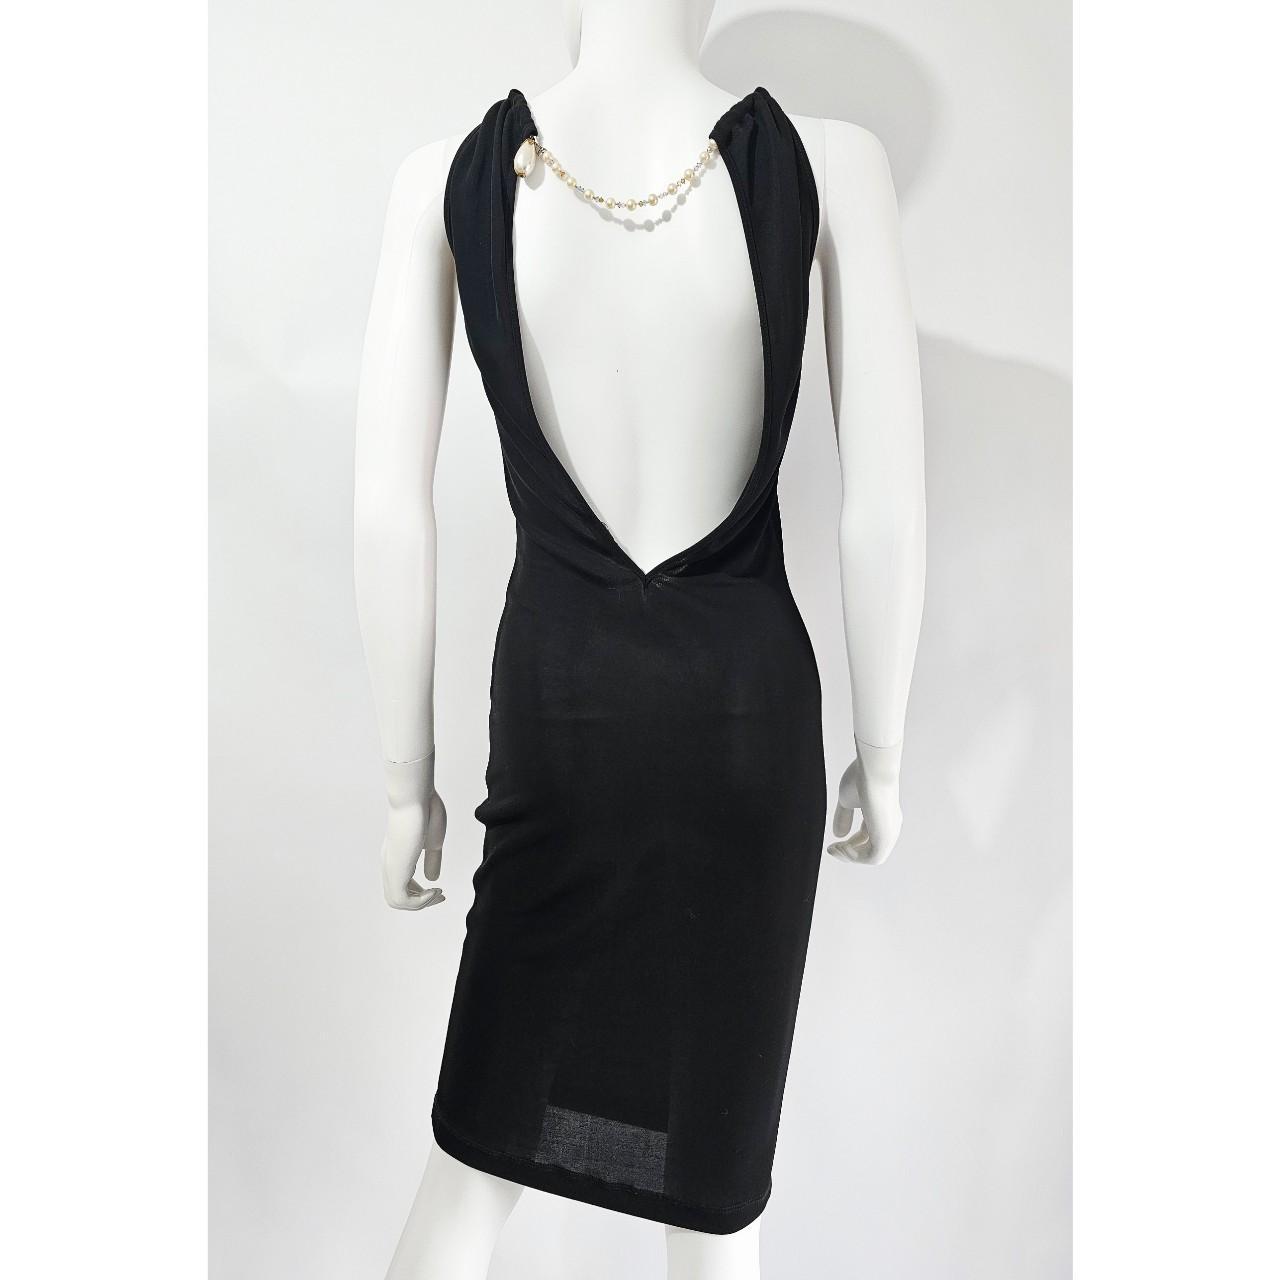 Dolce & Gabbana Women's Black and Silver Dress - 4